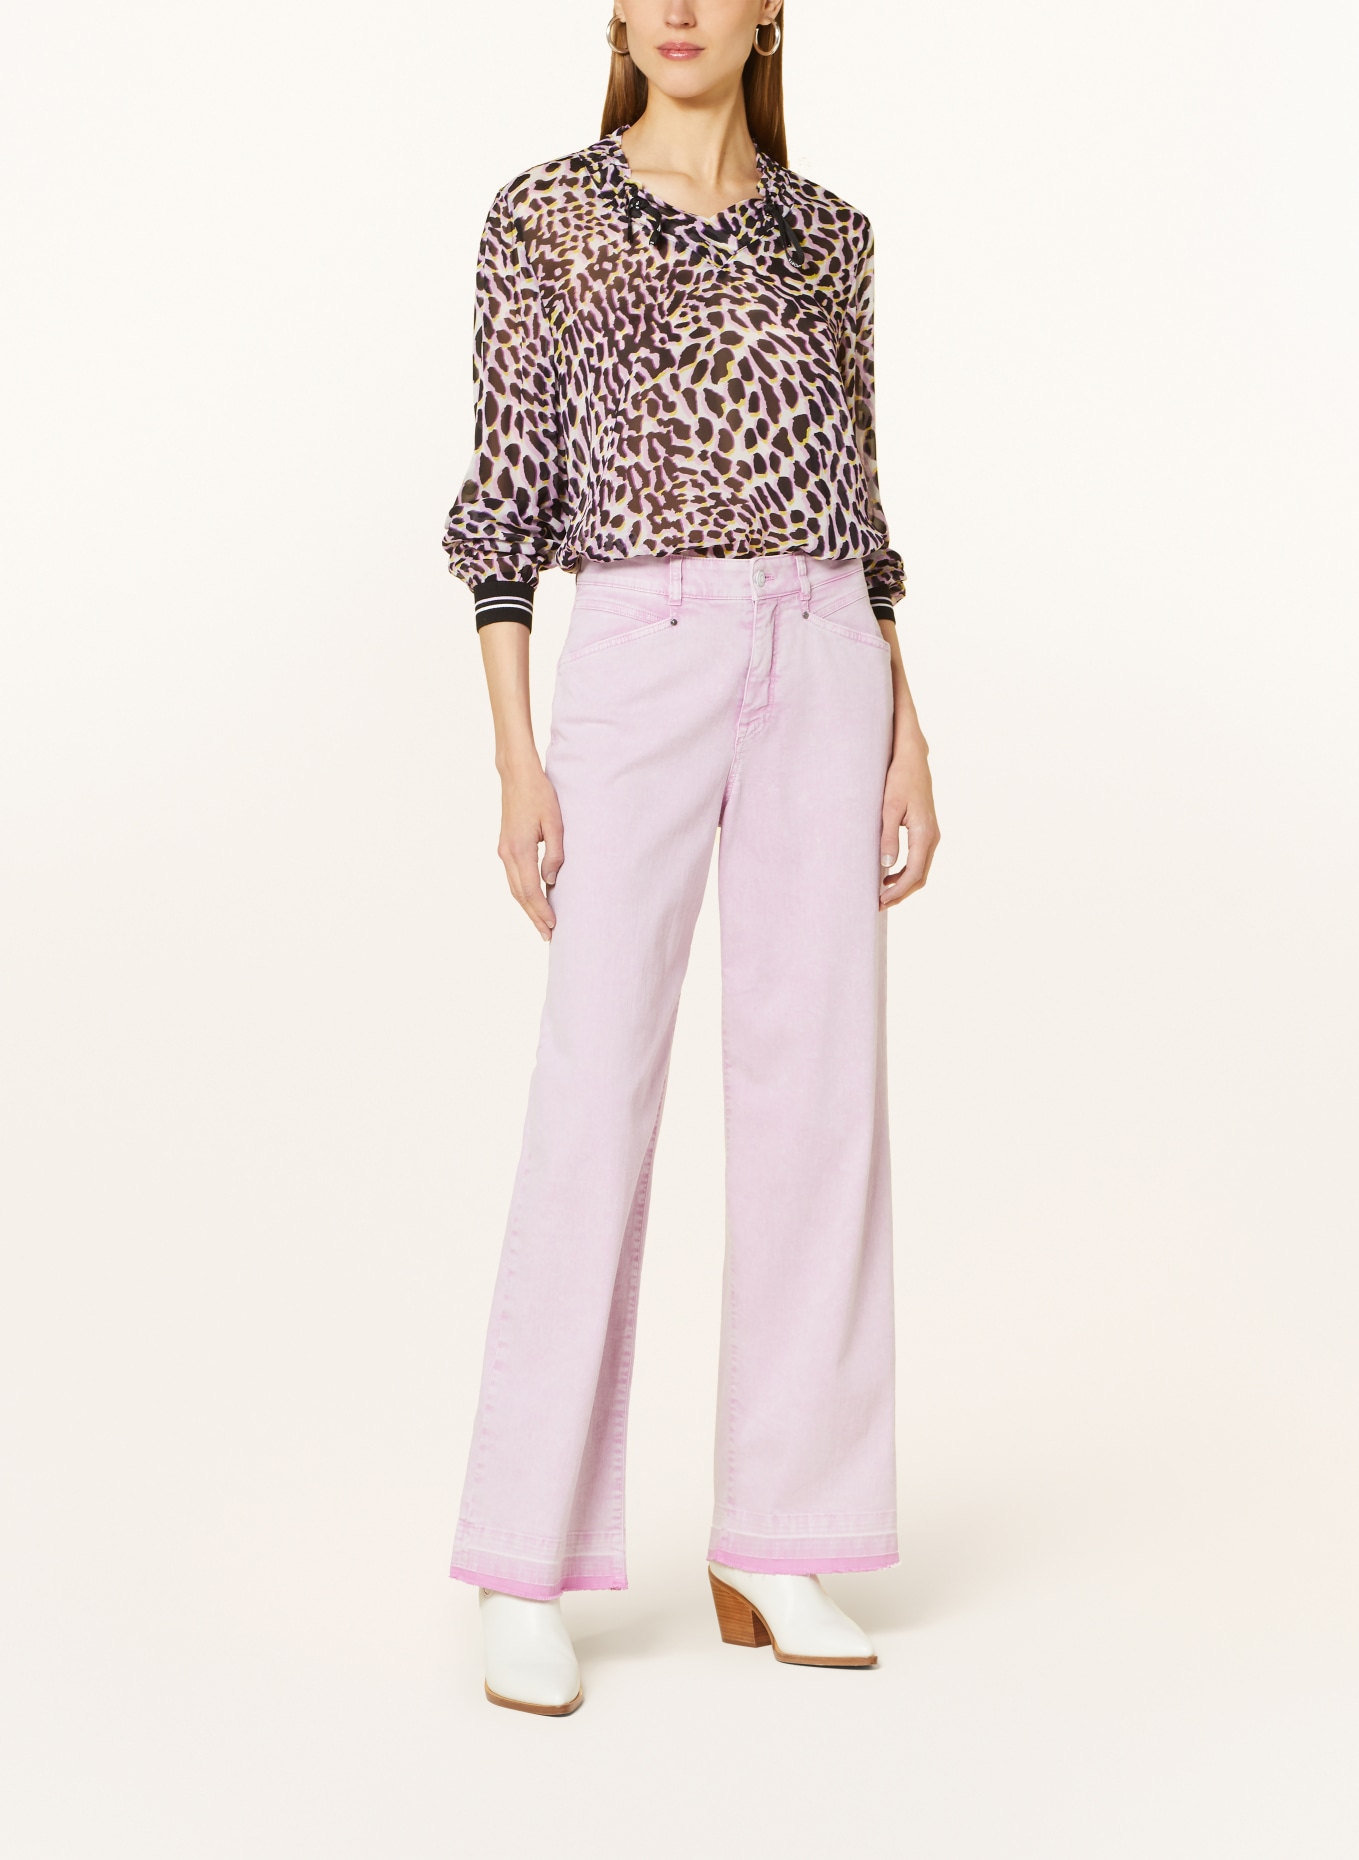 MARC CAIN Blusenshirt, Farbe: 708 bright pink lavender (Bild 2)